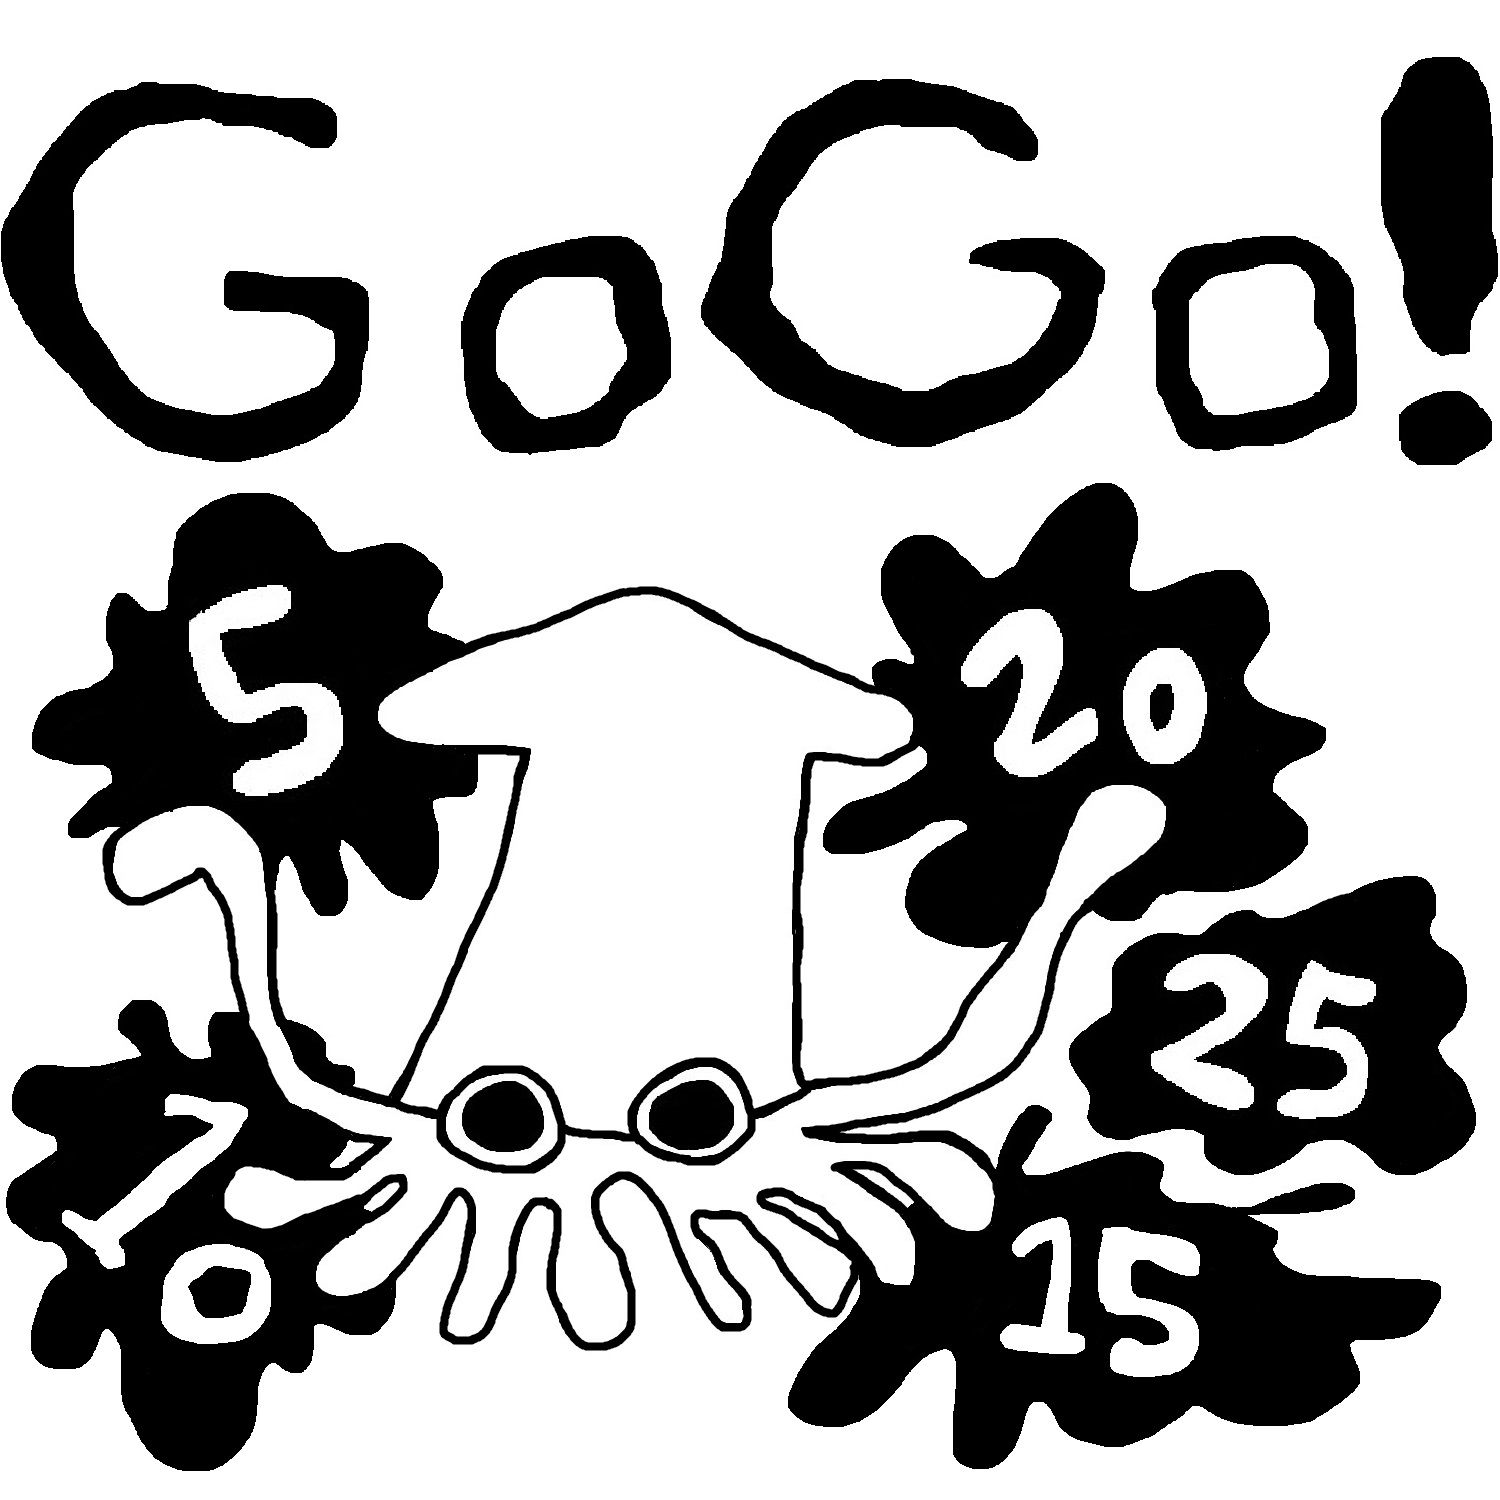 GoGoGotobi ซื้อขายอัตโนมัติ